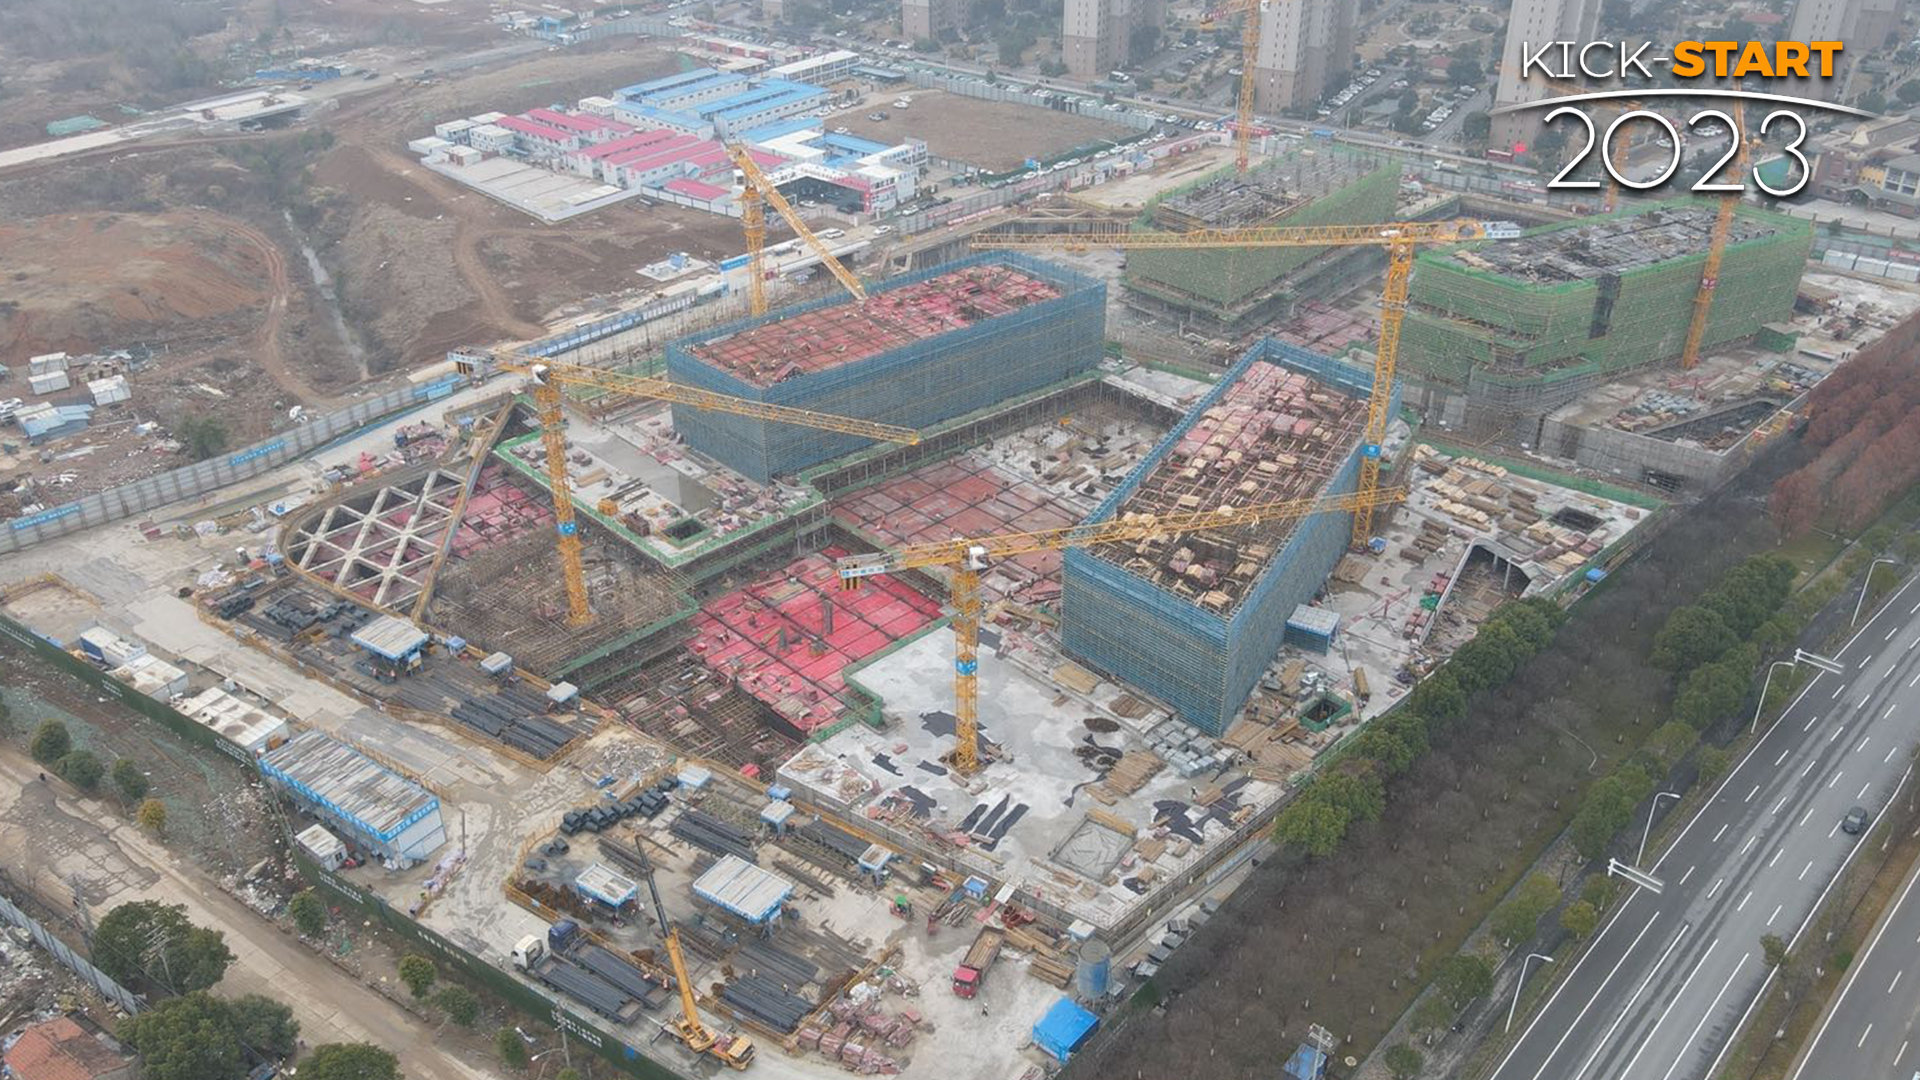 Live: KickStart 2023 — Construction goes full steam ahead in China